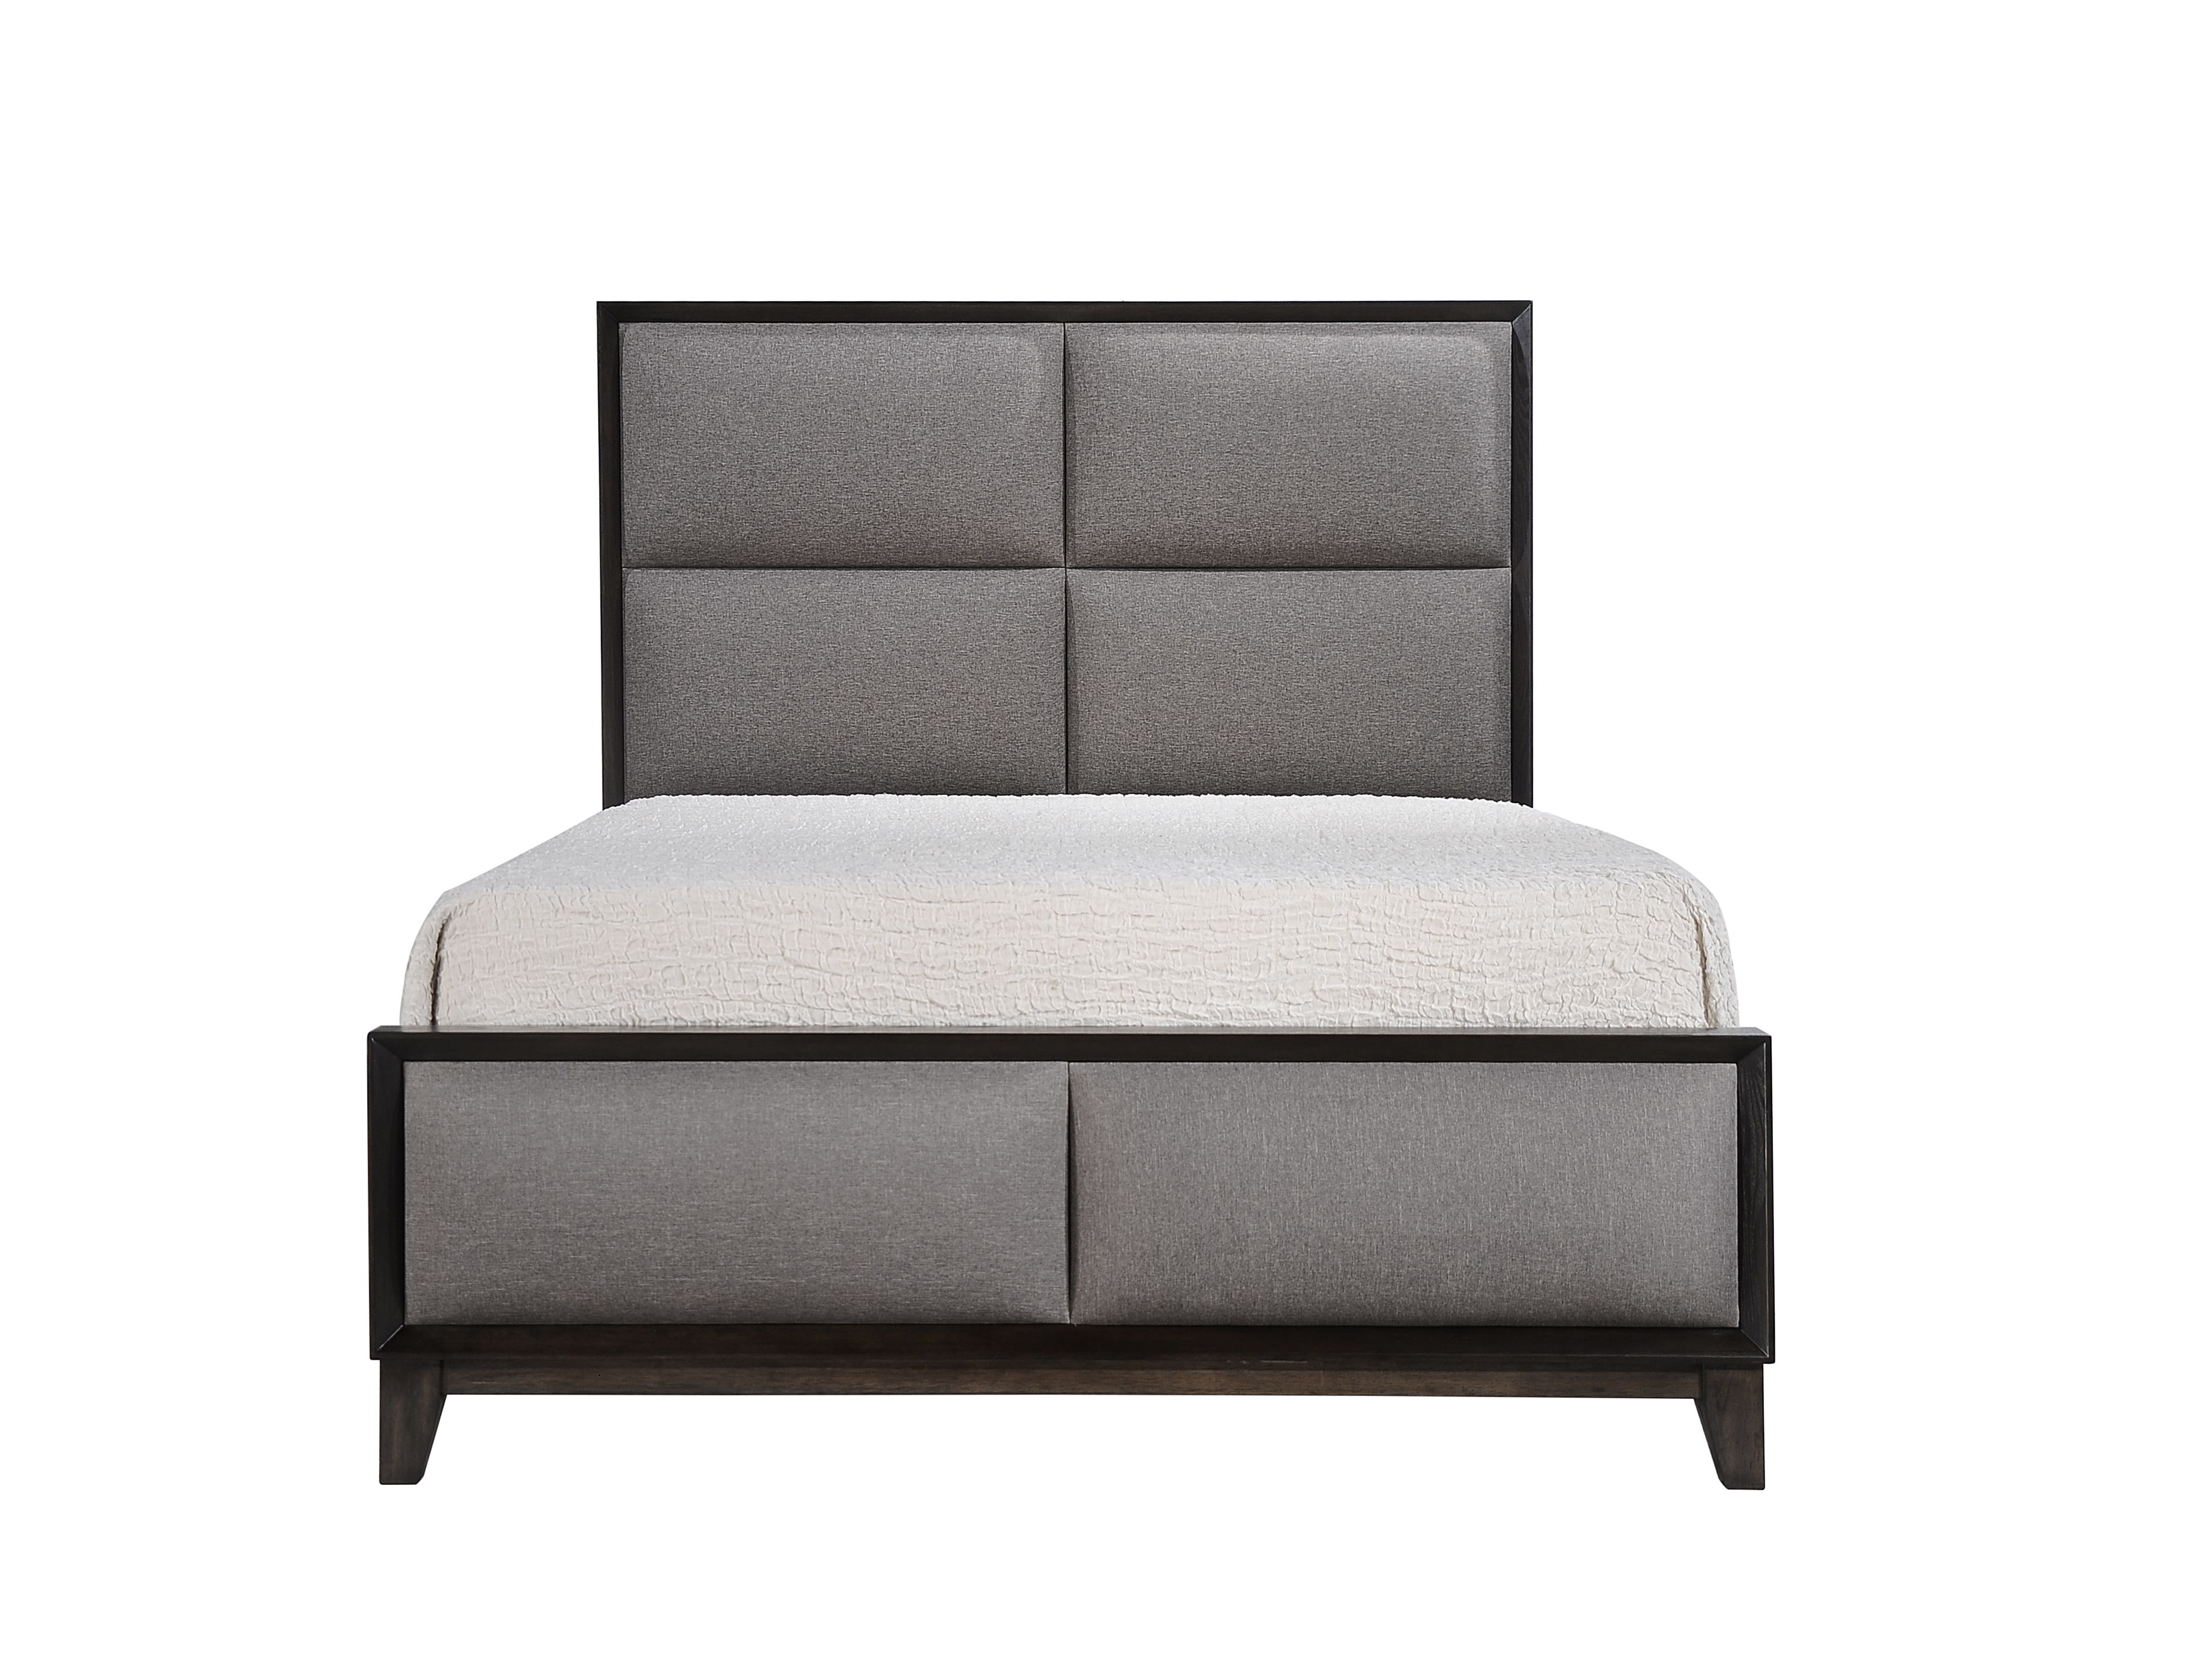 Consuelo 5 Piece Modern Upholstered Bedroom Set, Queen, Gray Wood - image 2 of 11